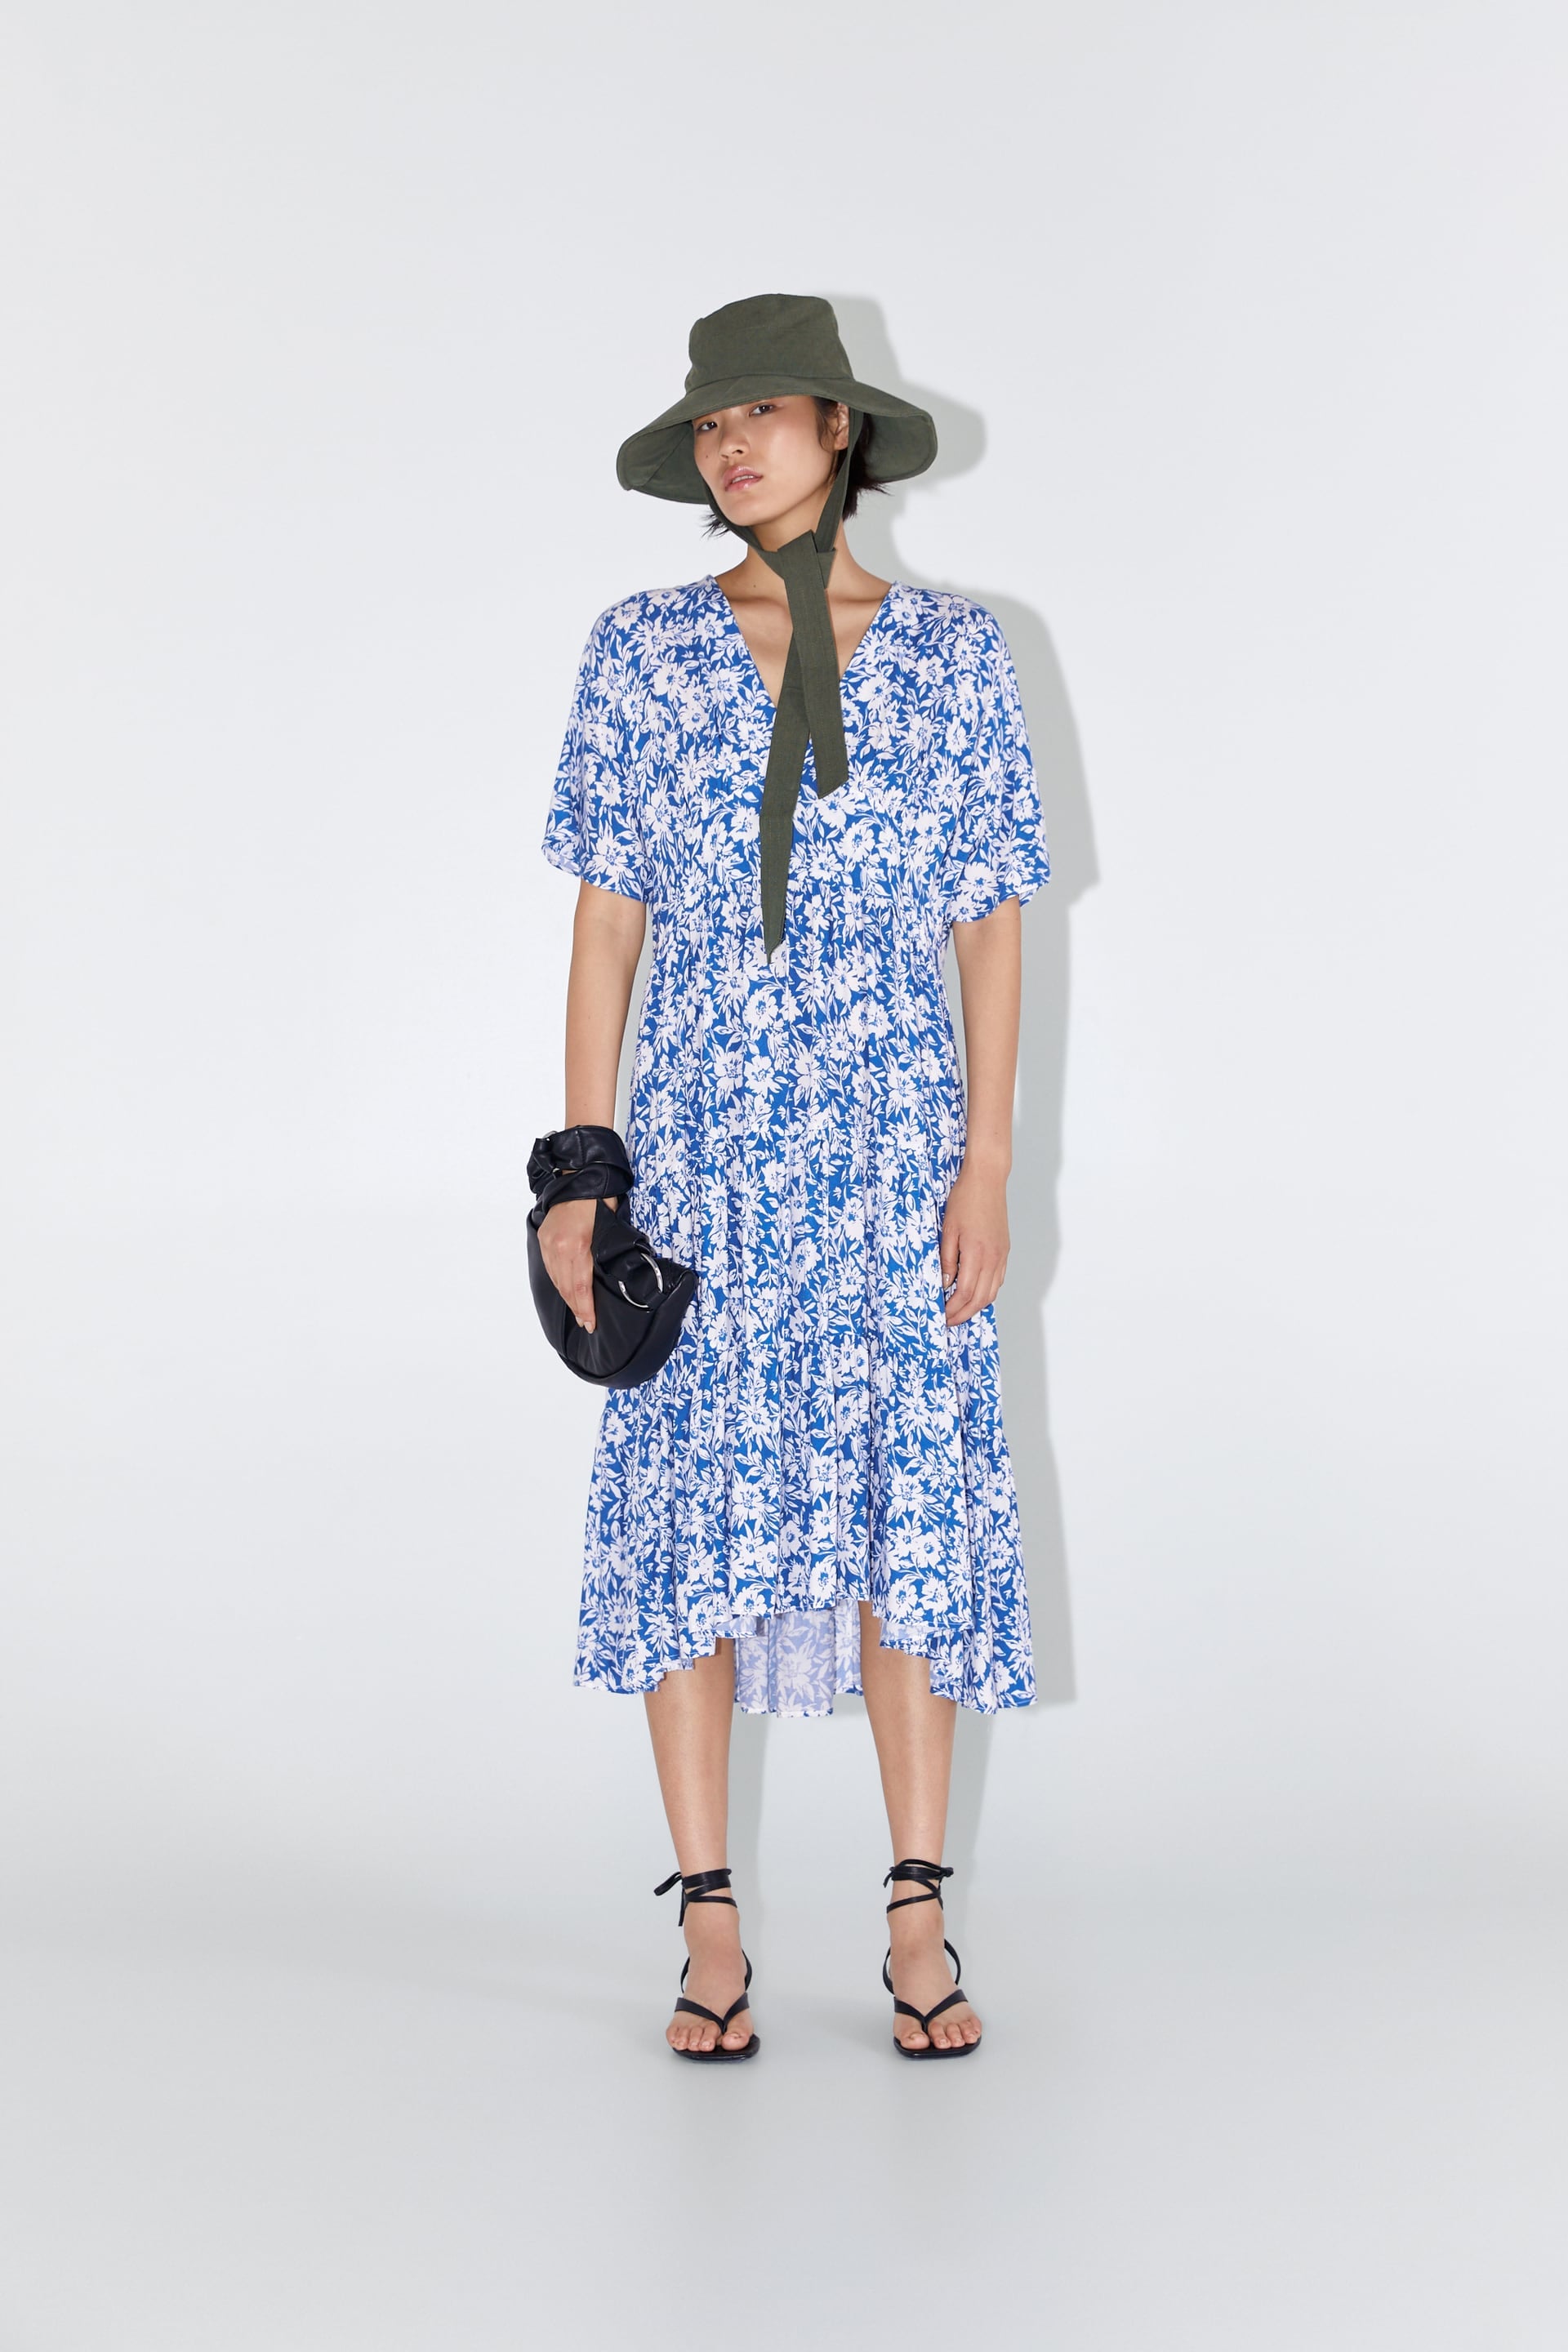 Zara Floral Print Dress | Mandy Moore 